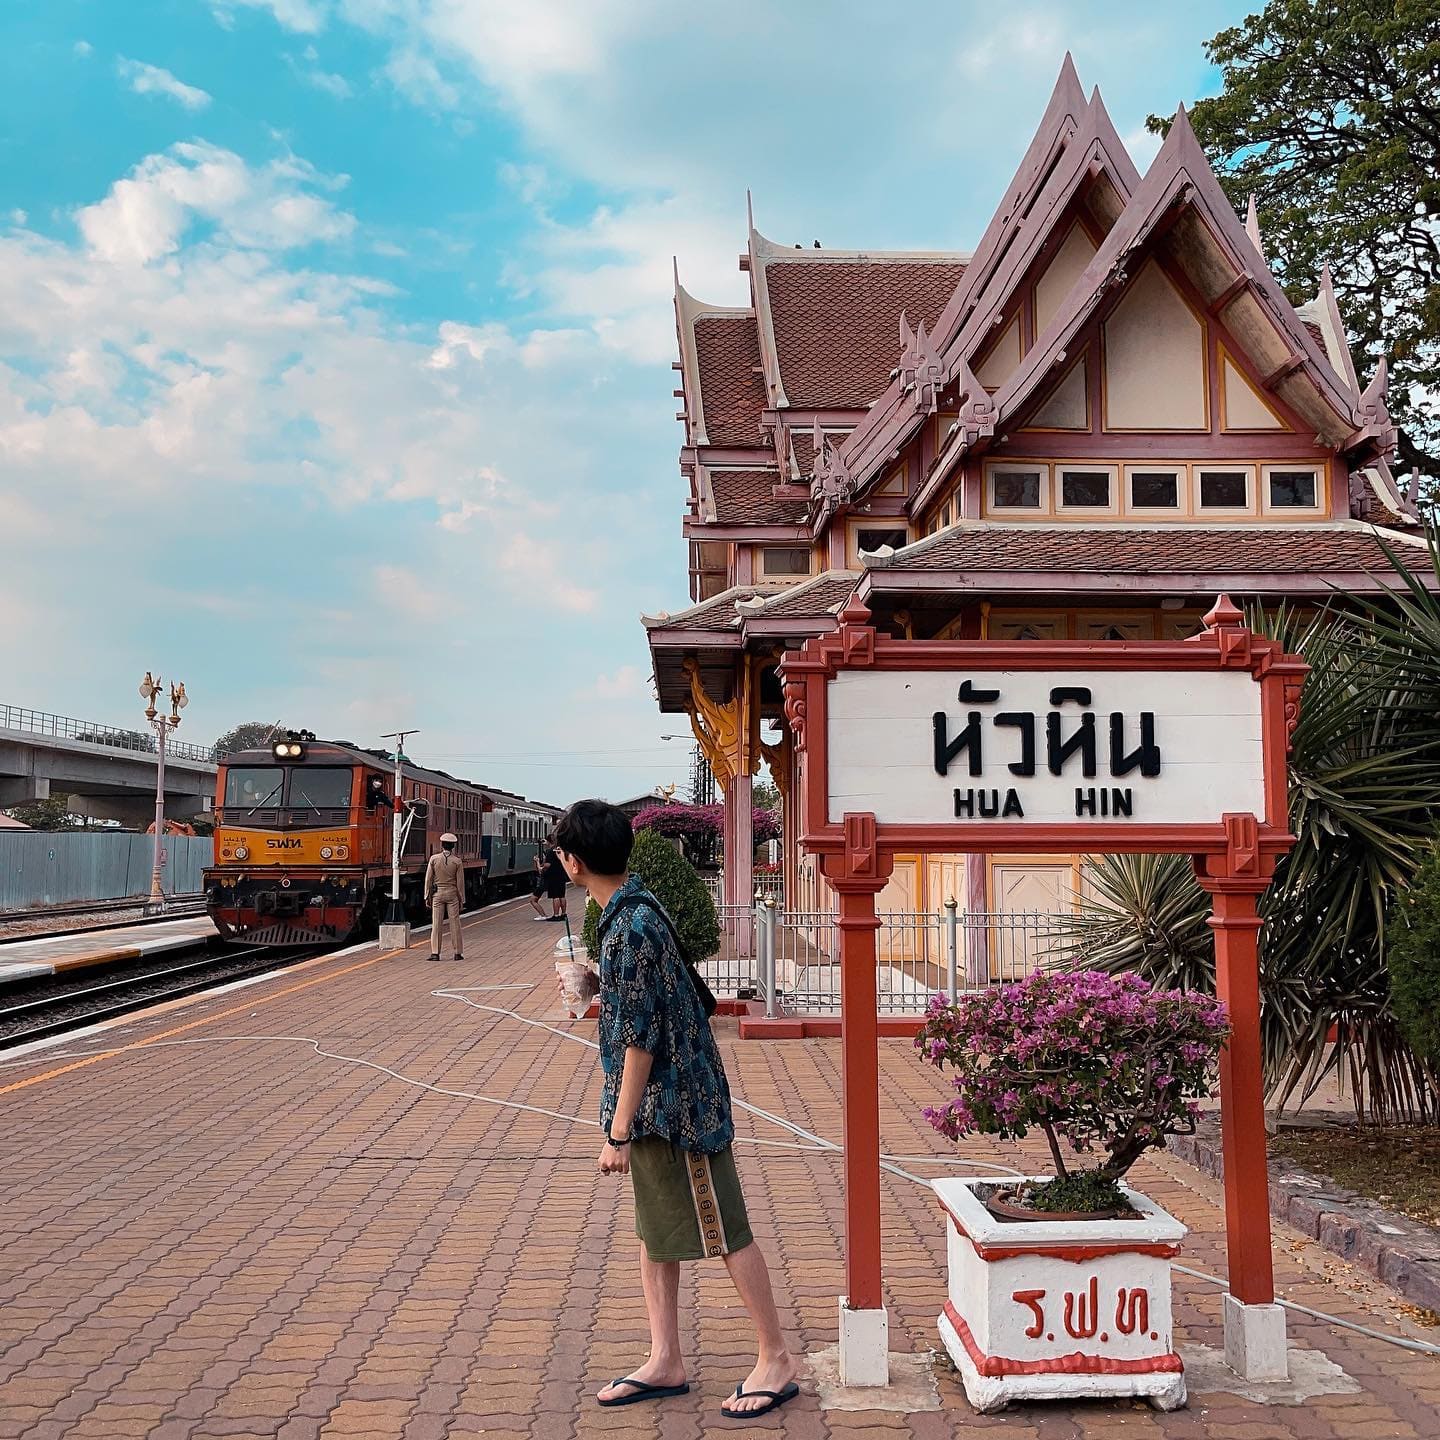 Hua Hin - Railway Station